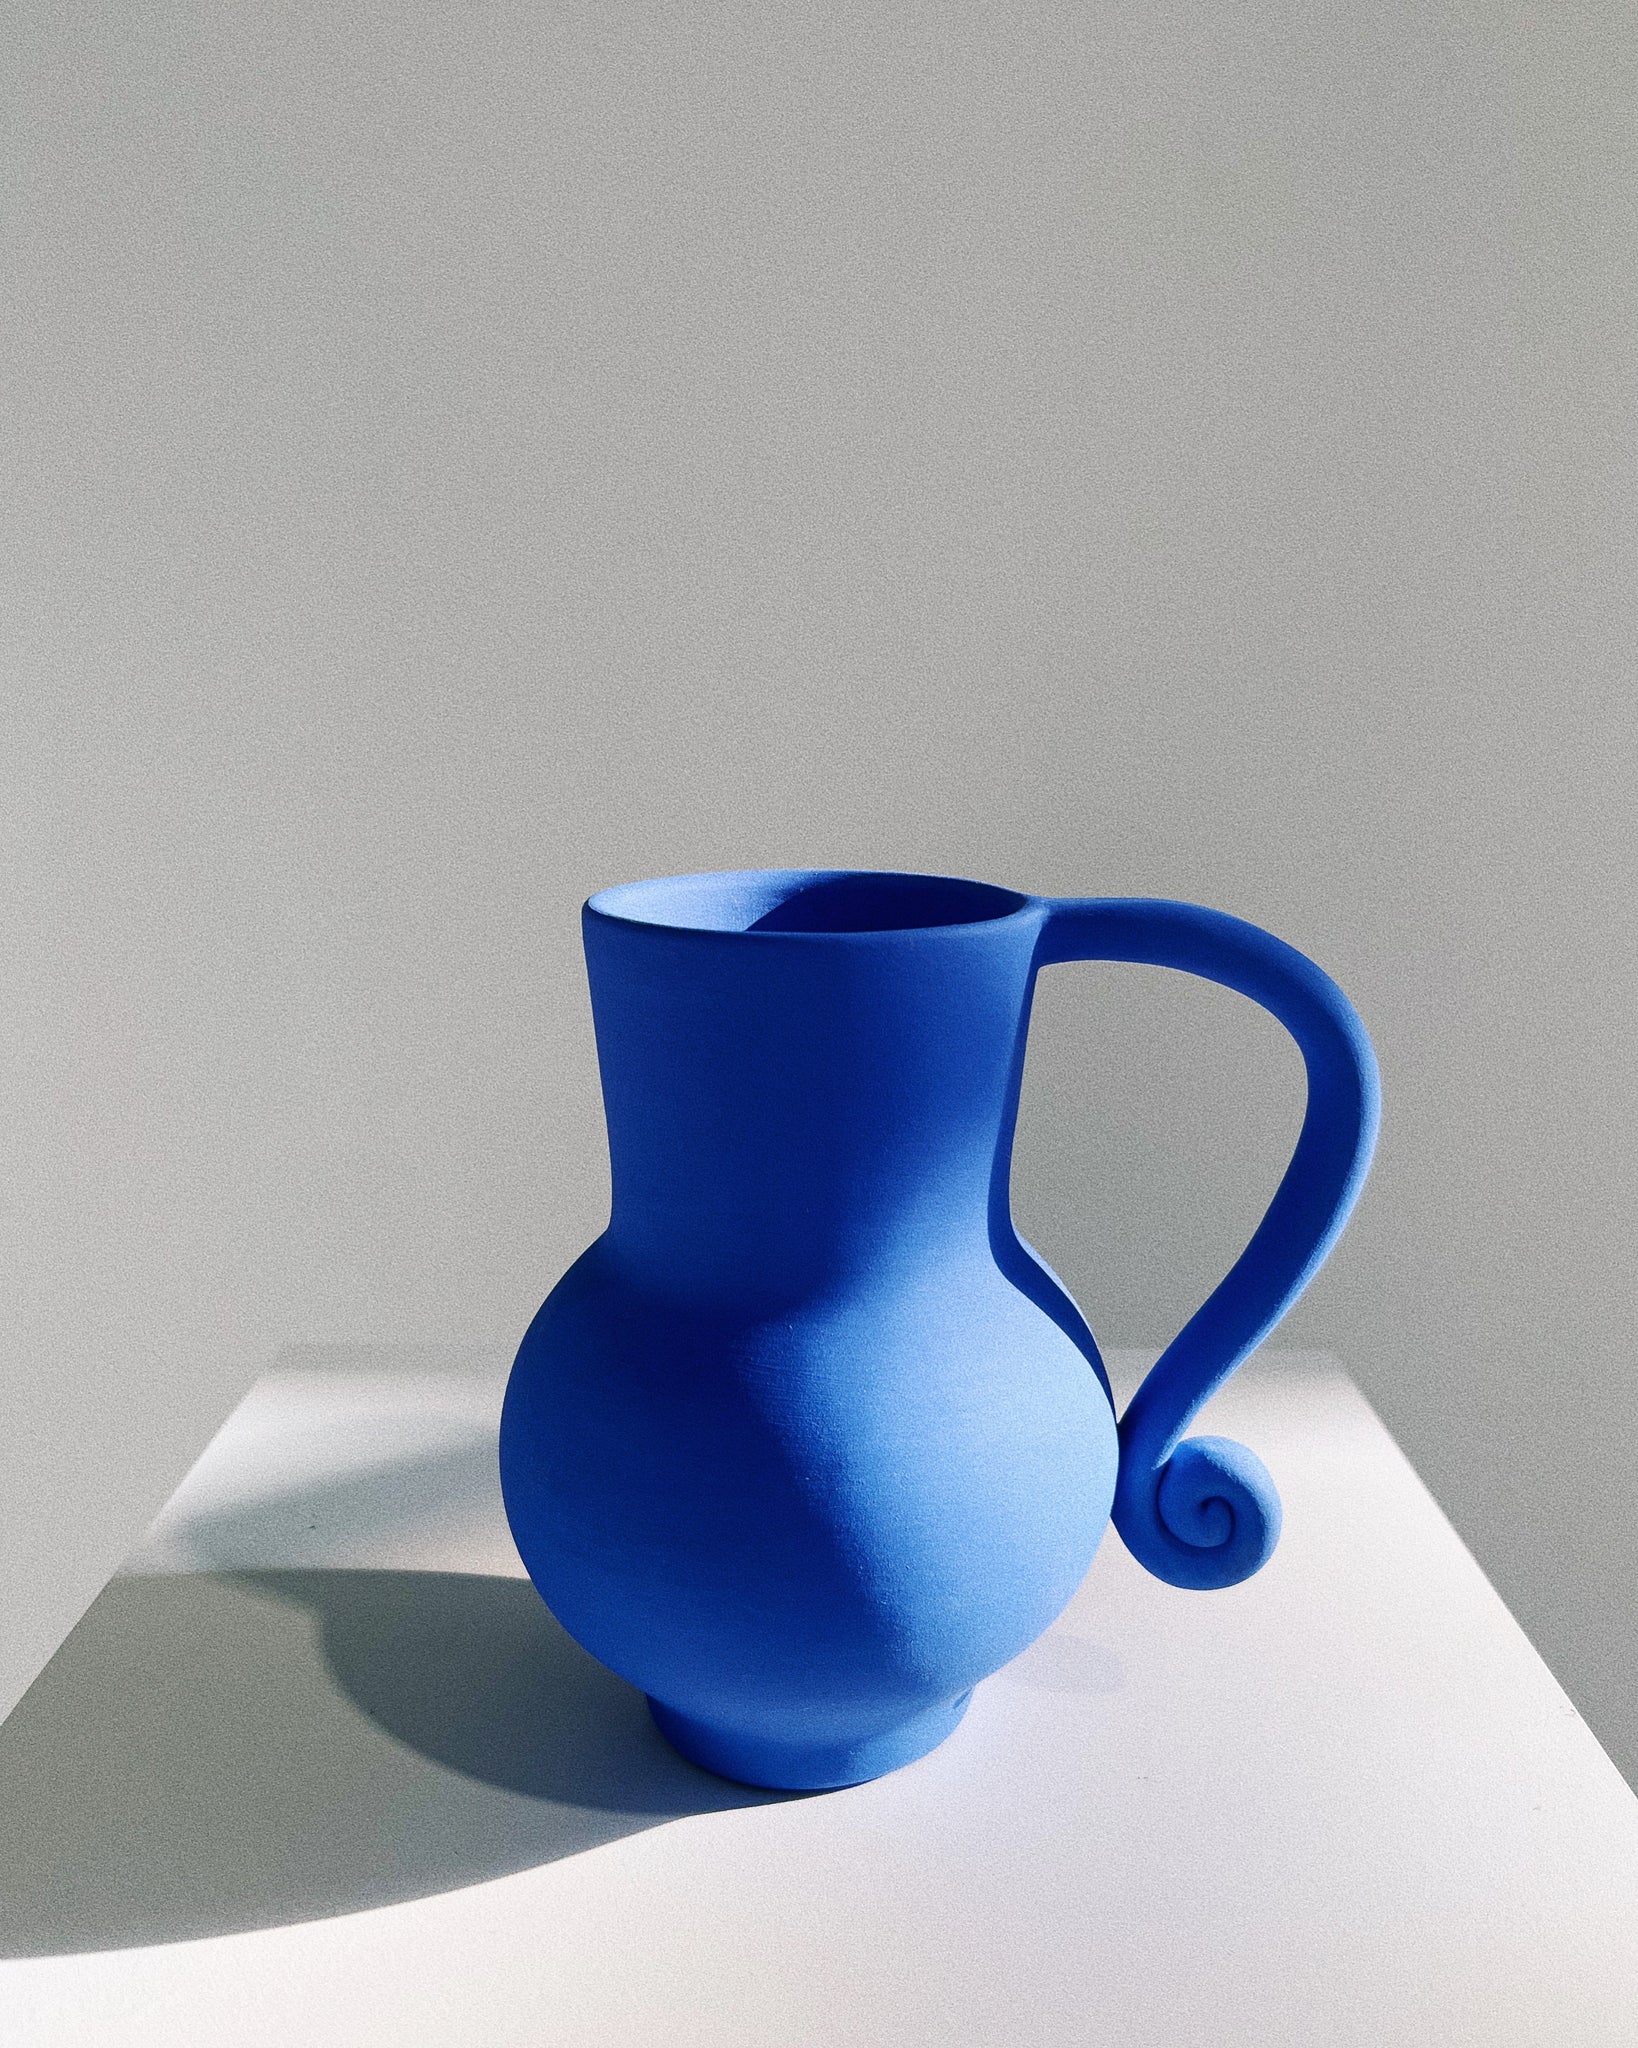 Vase - Matisse Blue